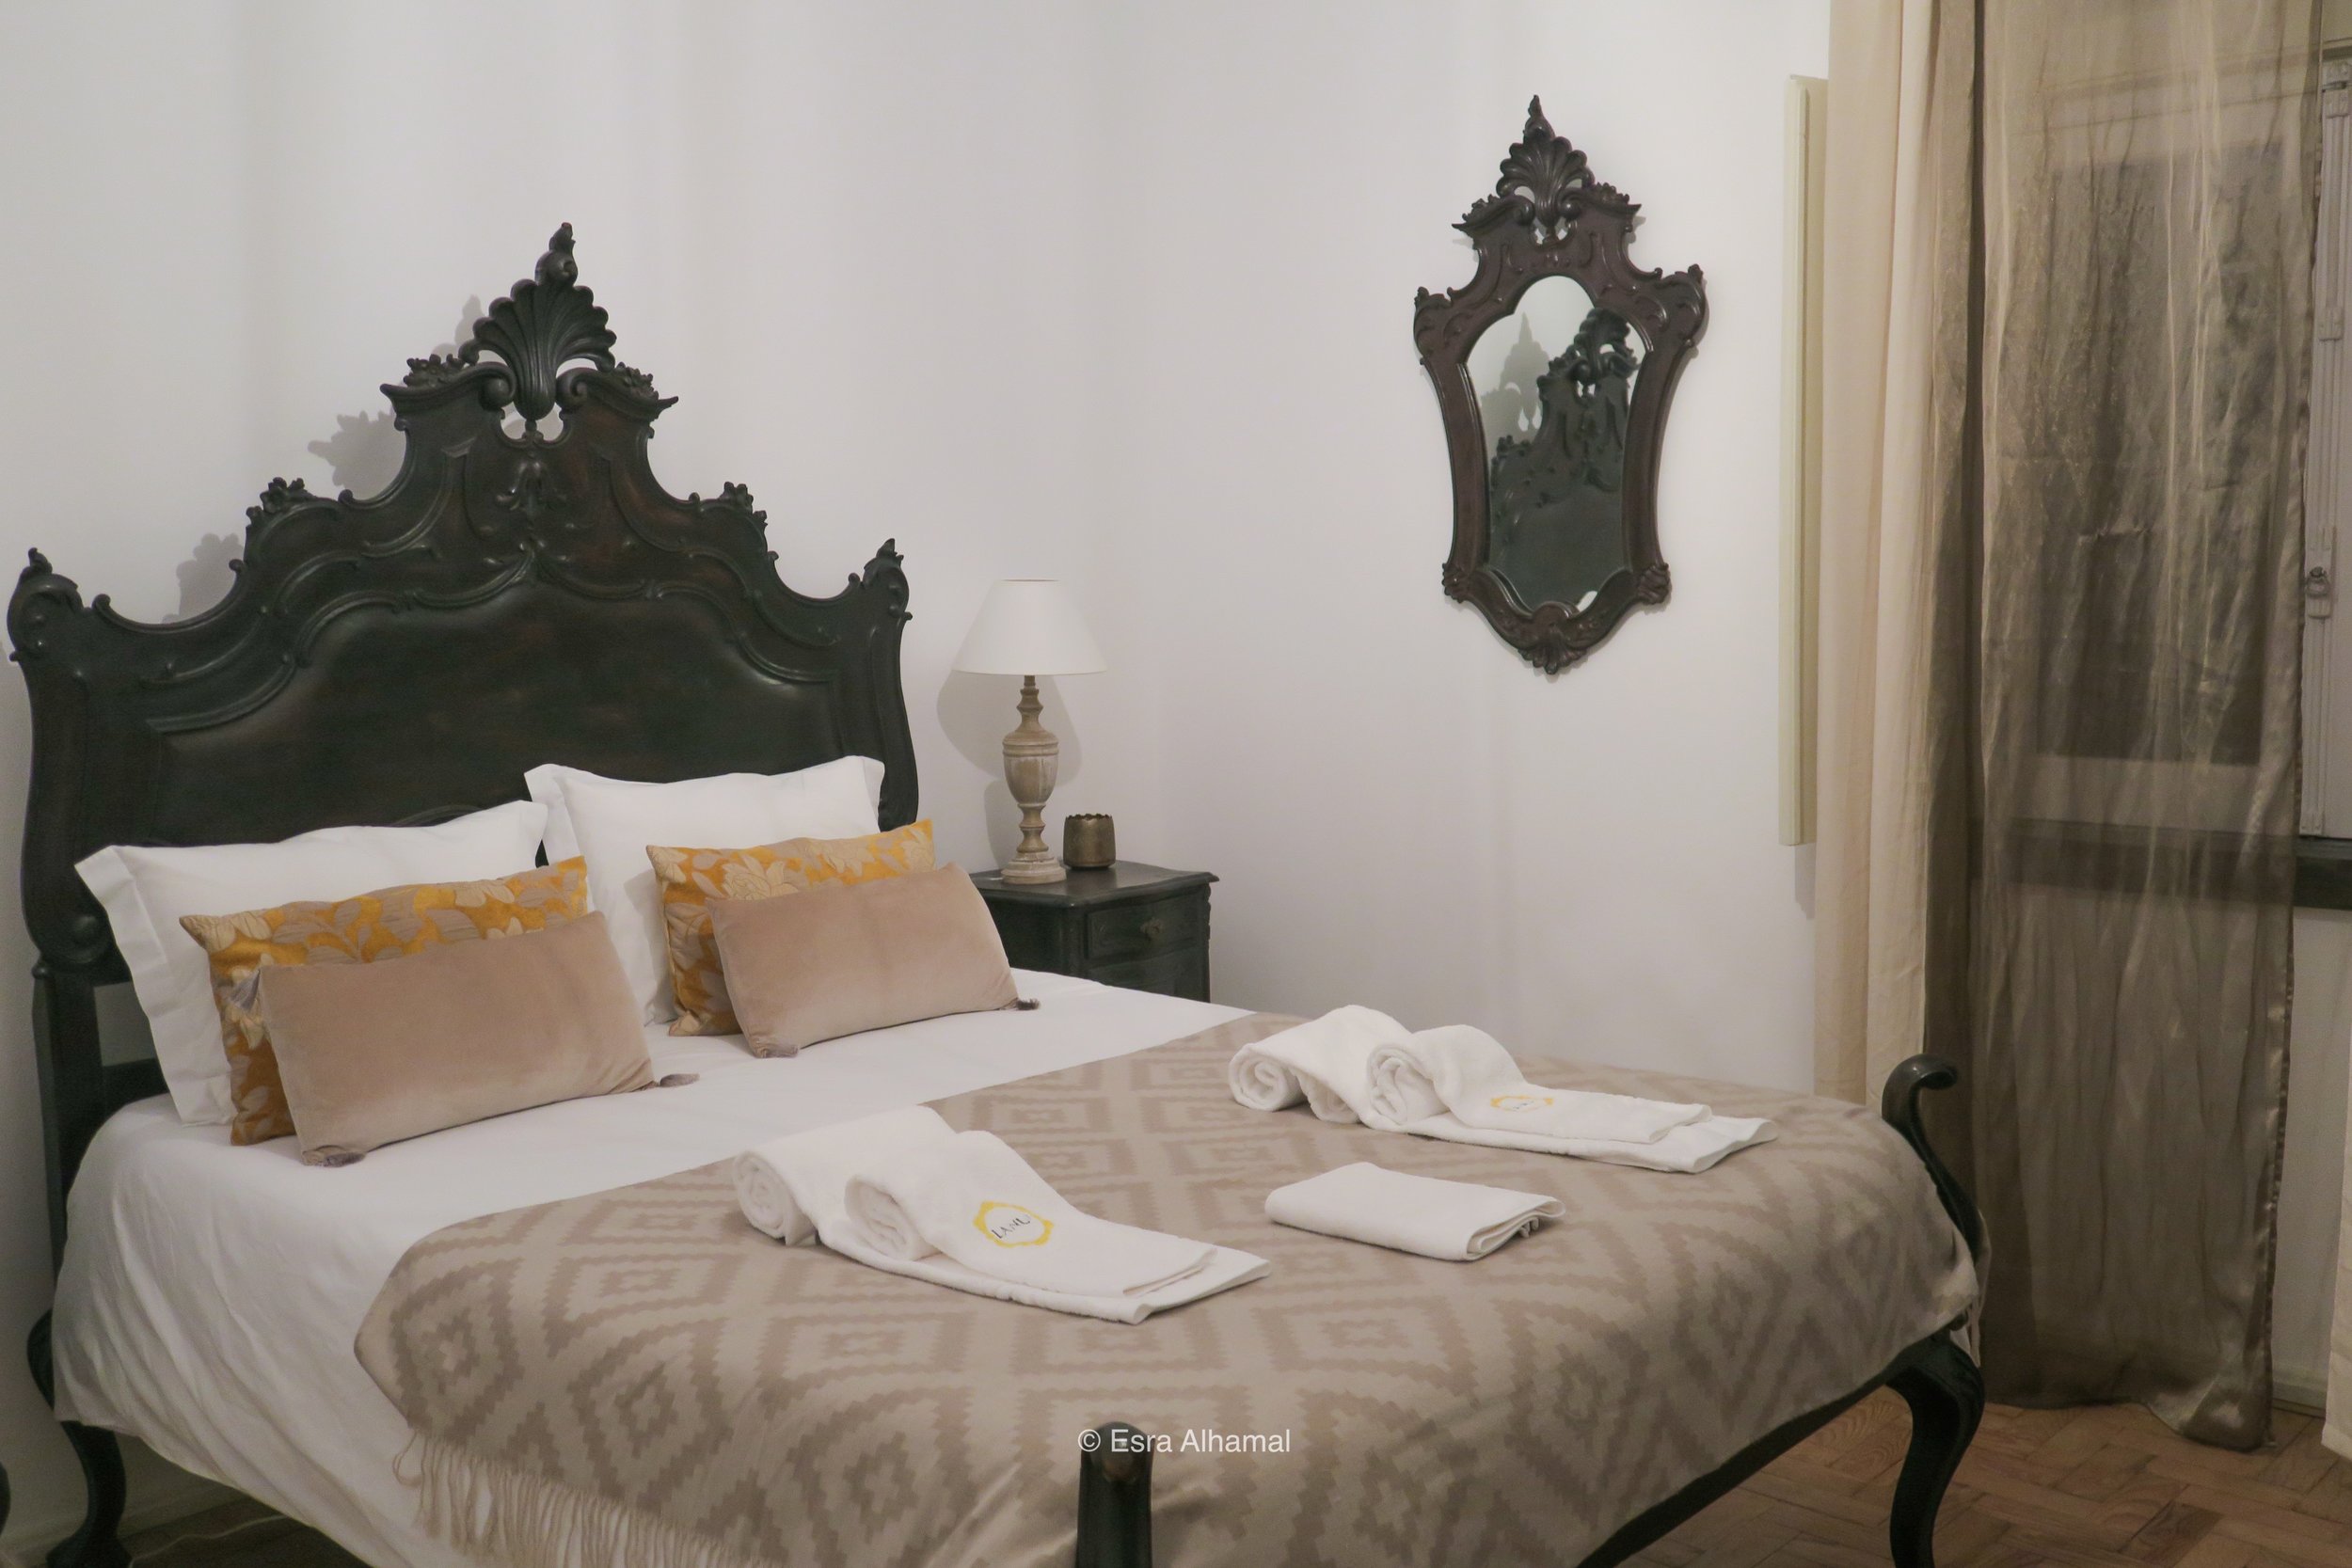 Lanui Master bedroom in Sintra